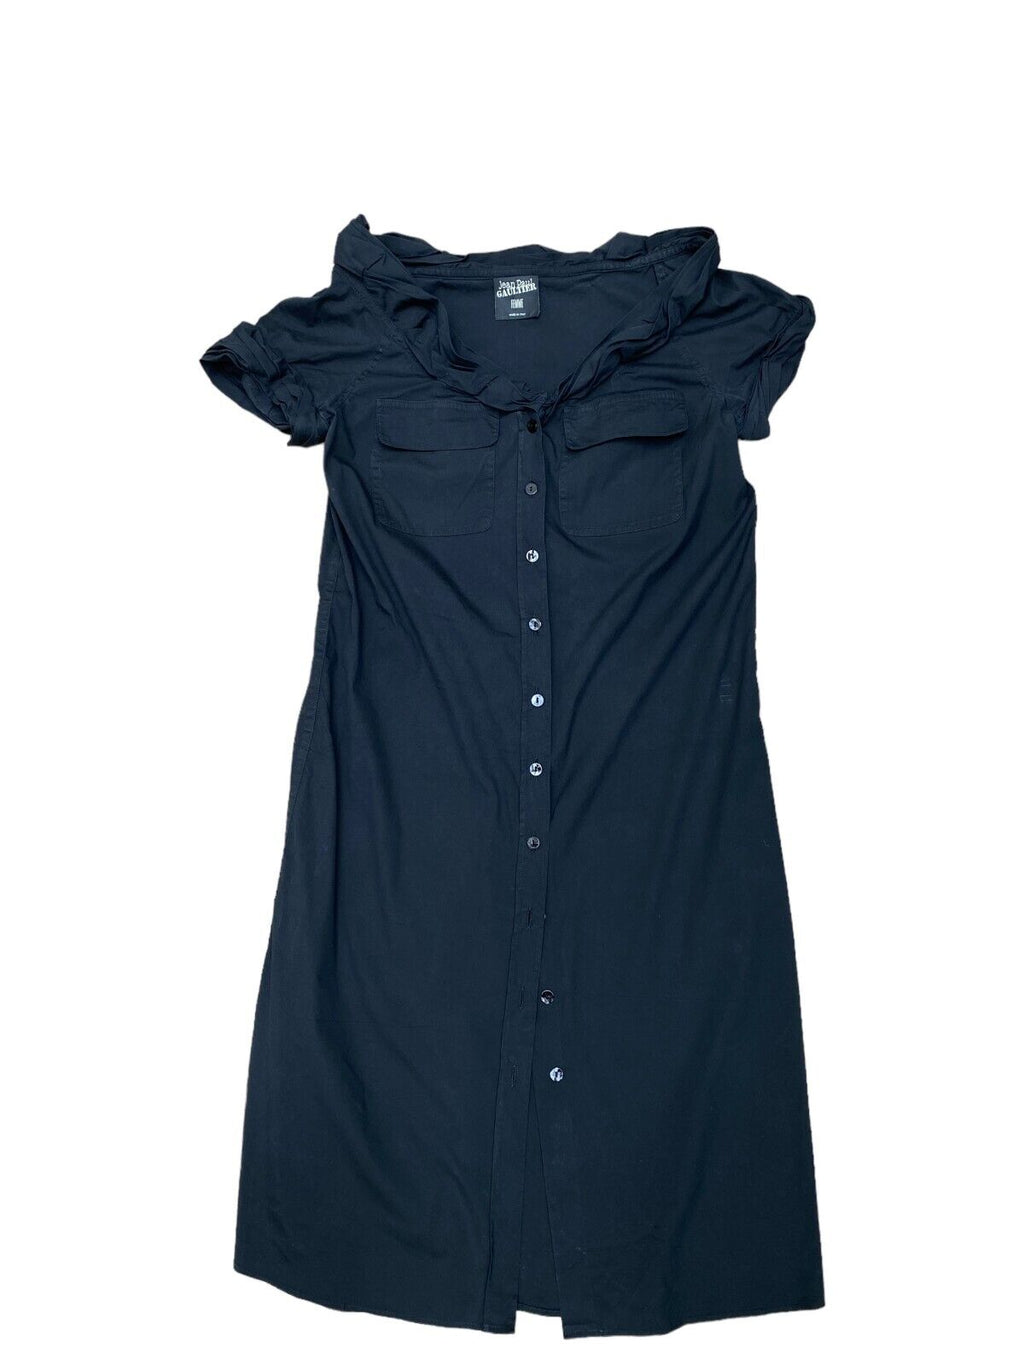 Vintage Elongated Black Dress Size IT 44 / FR 40 US 10